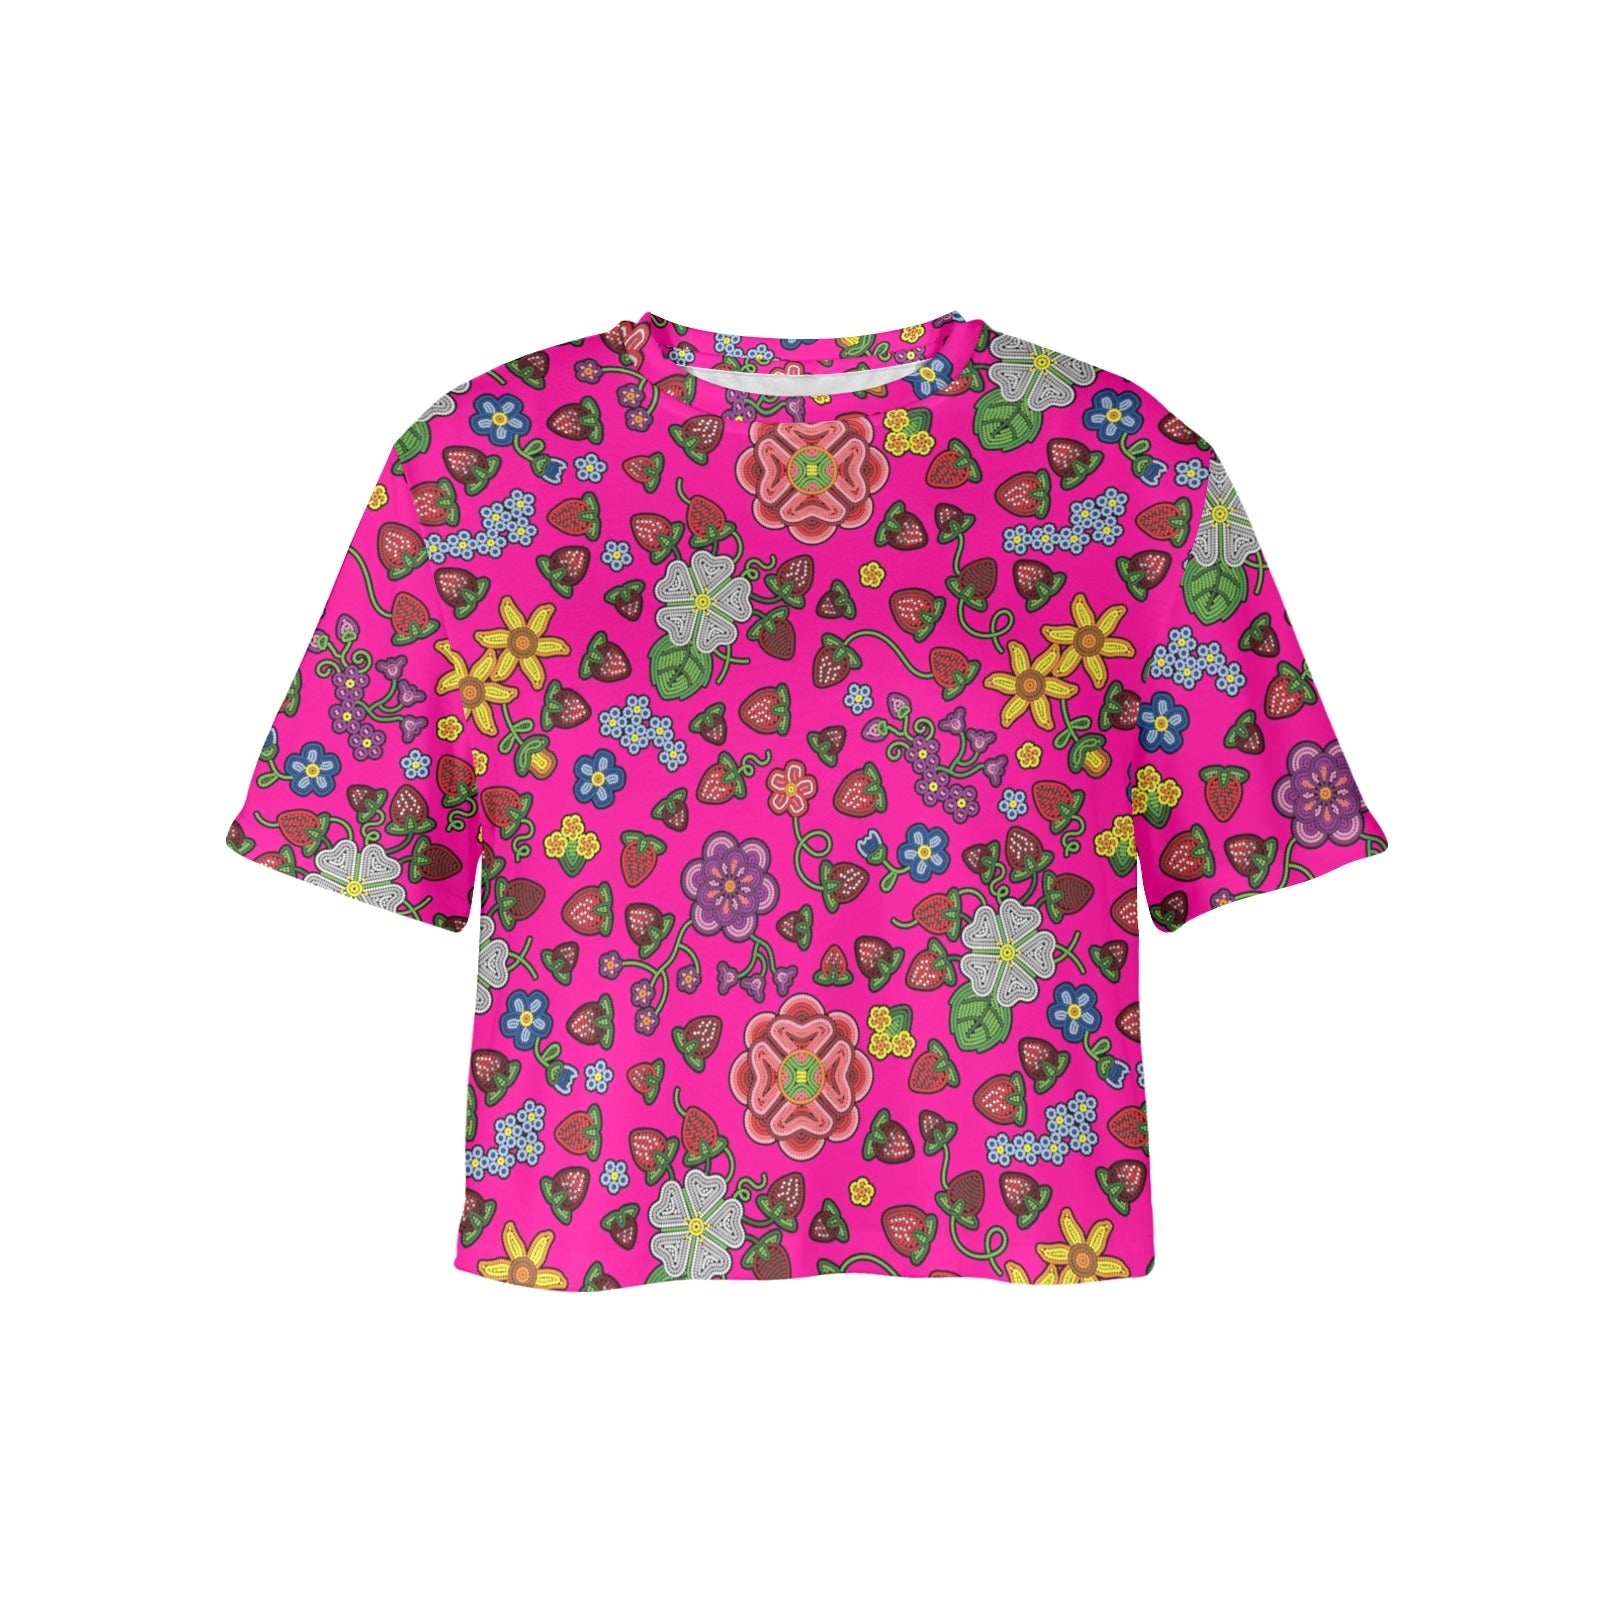 Berry Pop Blush Women's Cropped T-shirt